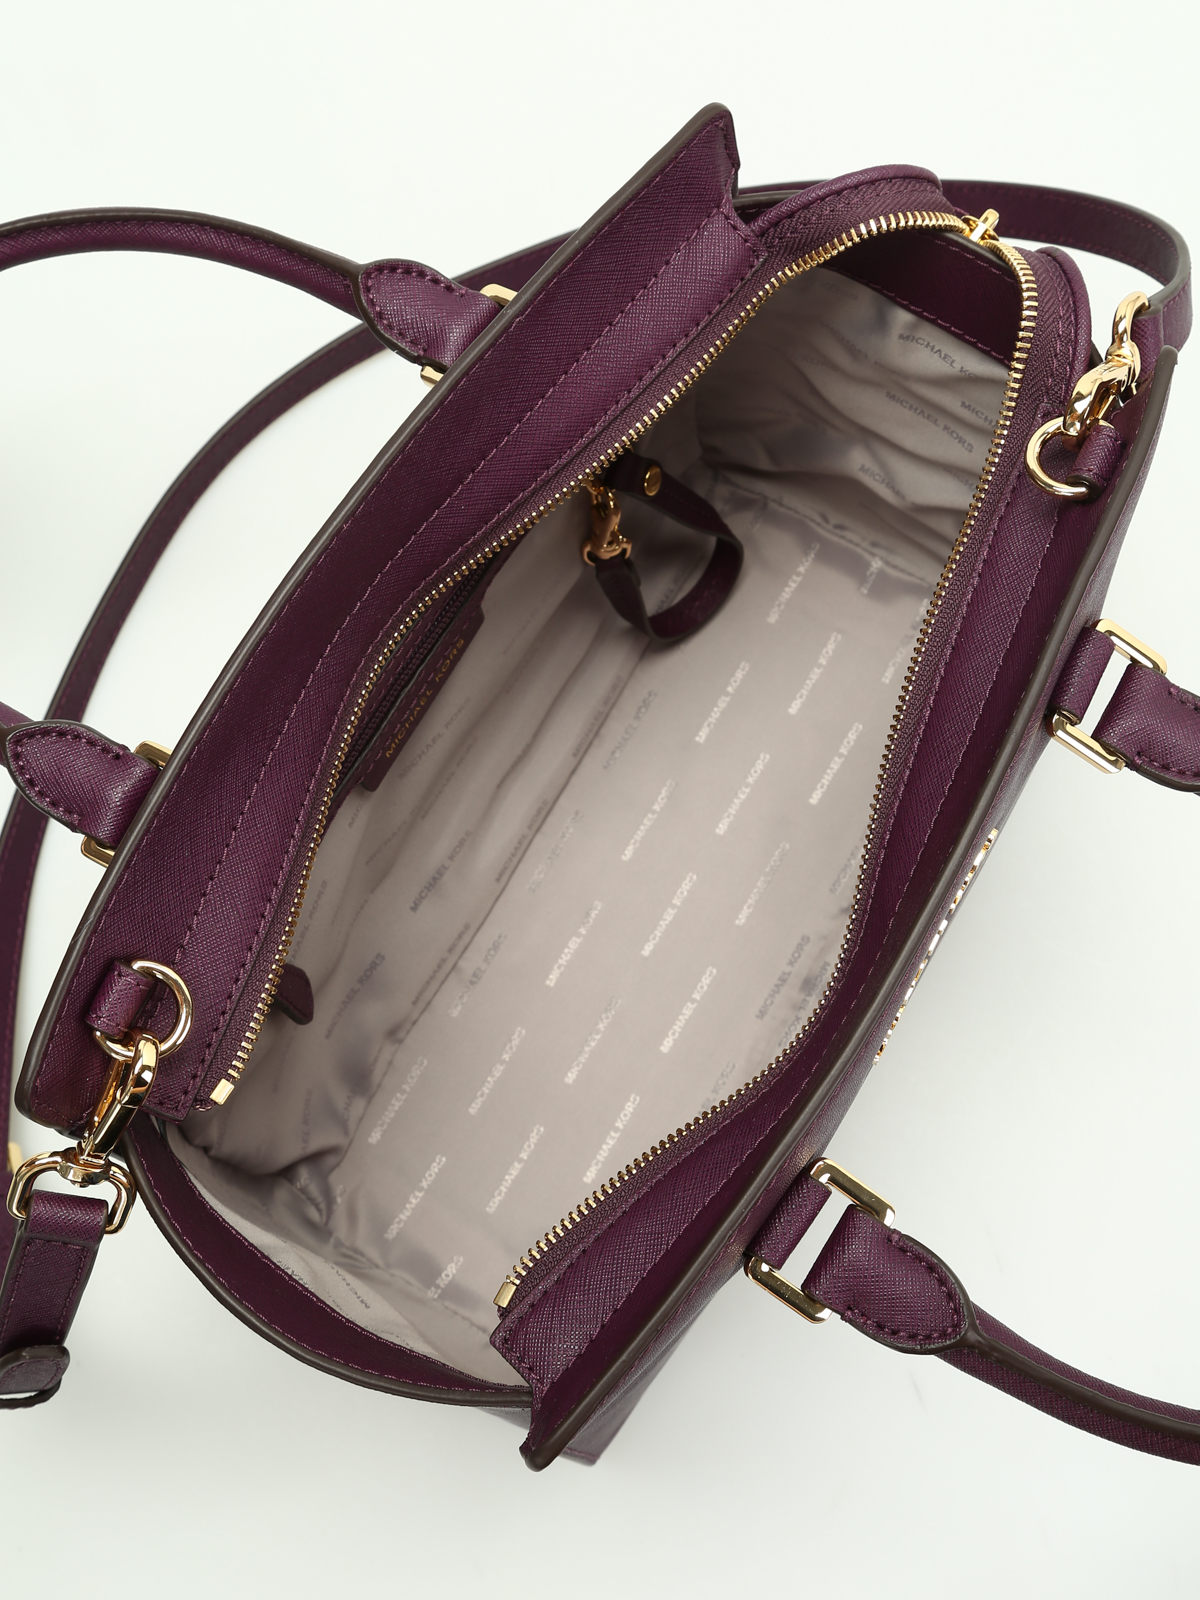 Michael Kors Selma Saffiano Leather Medium Top Zip Satchel Bag